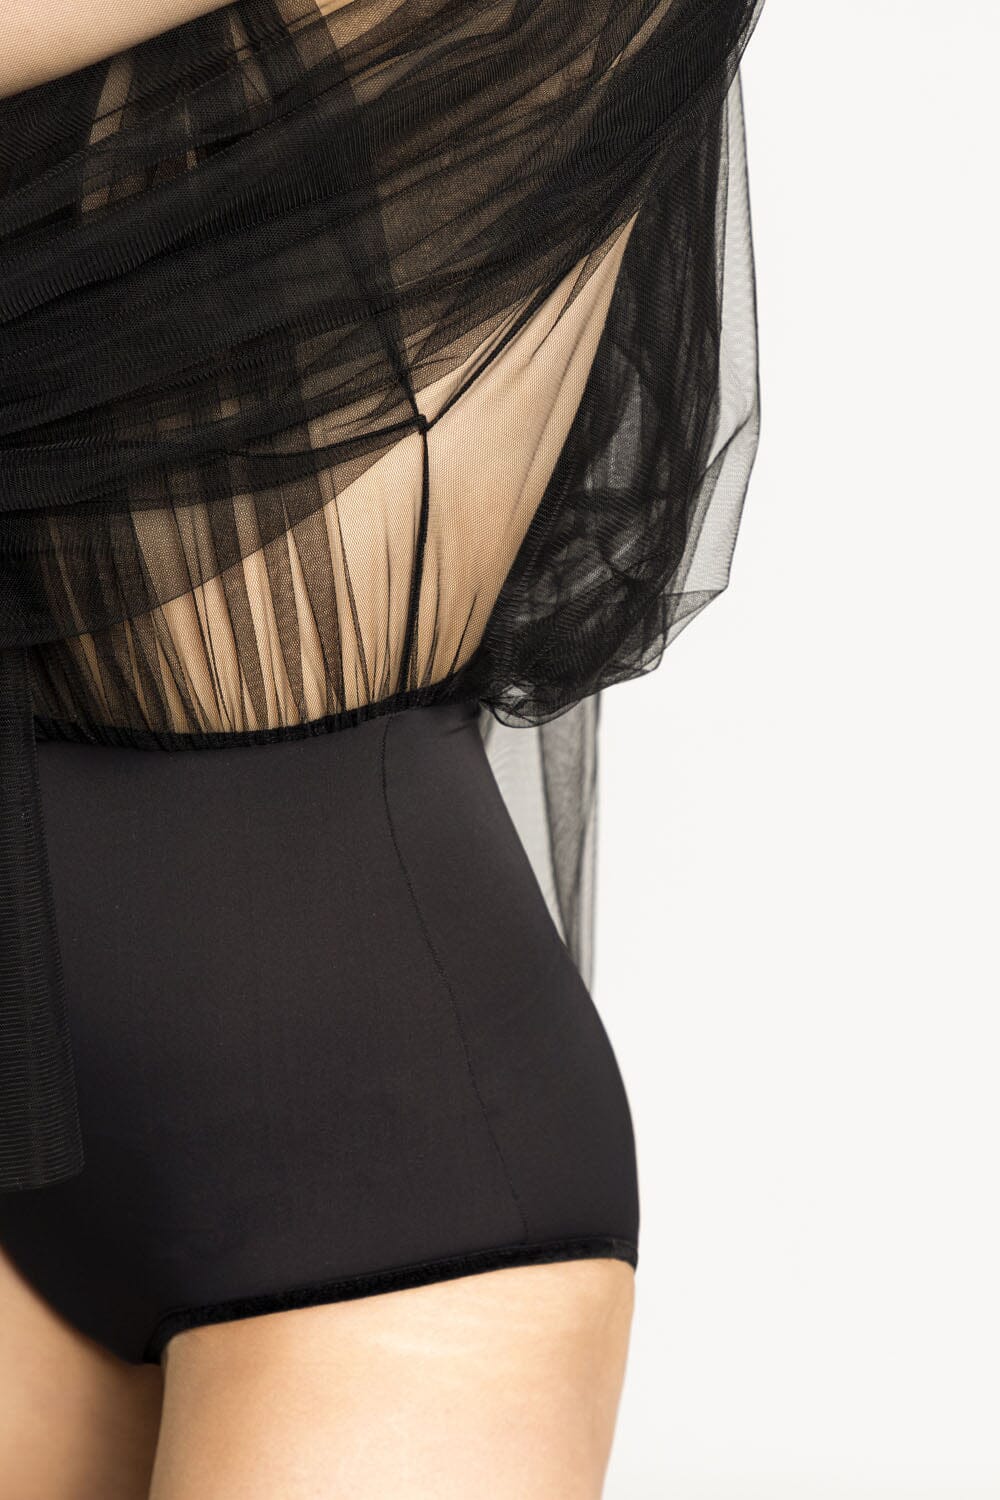  Marvelous Bodysuit Black Product Amoralle